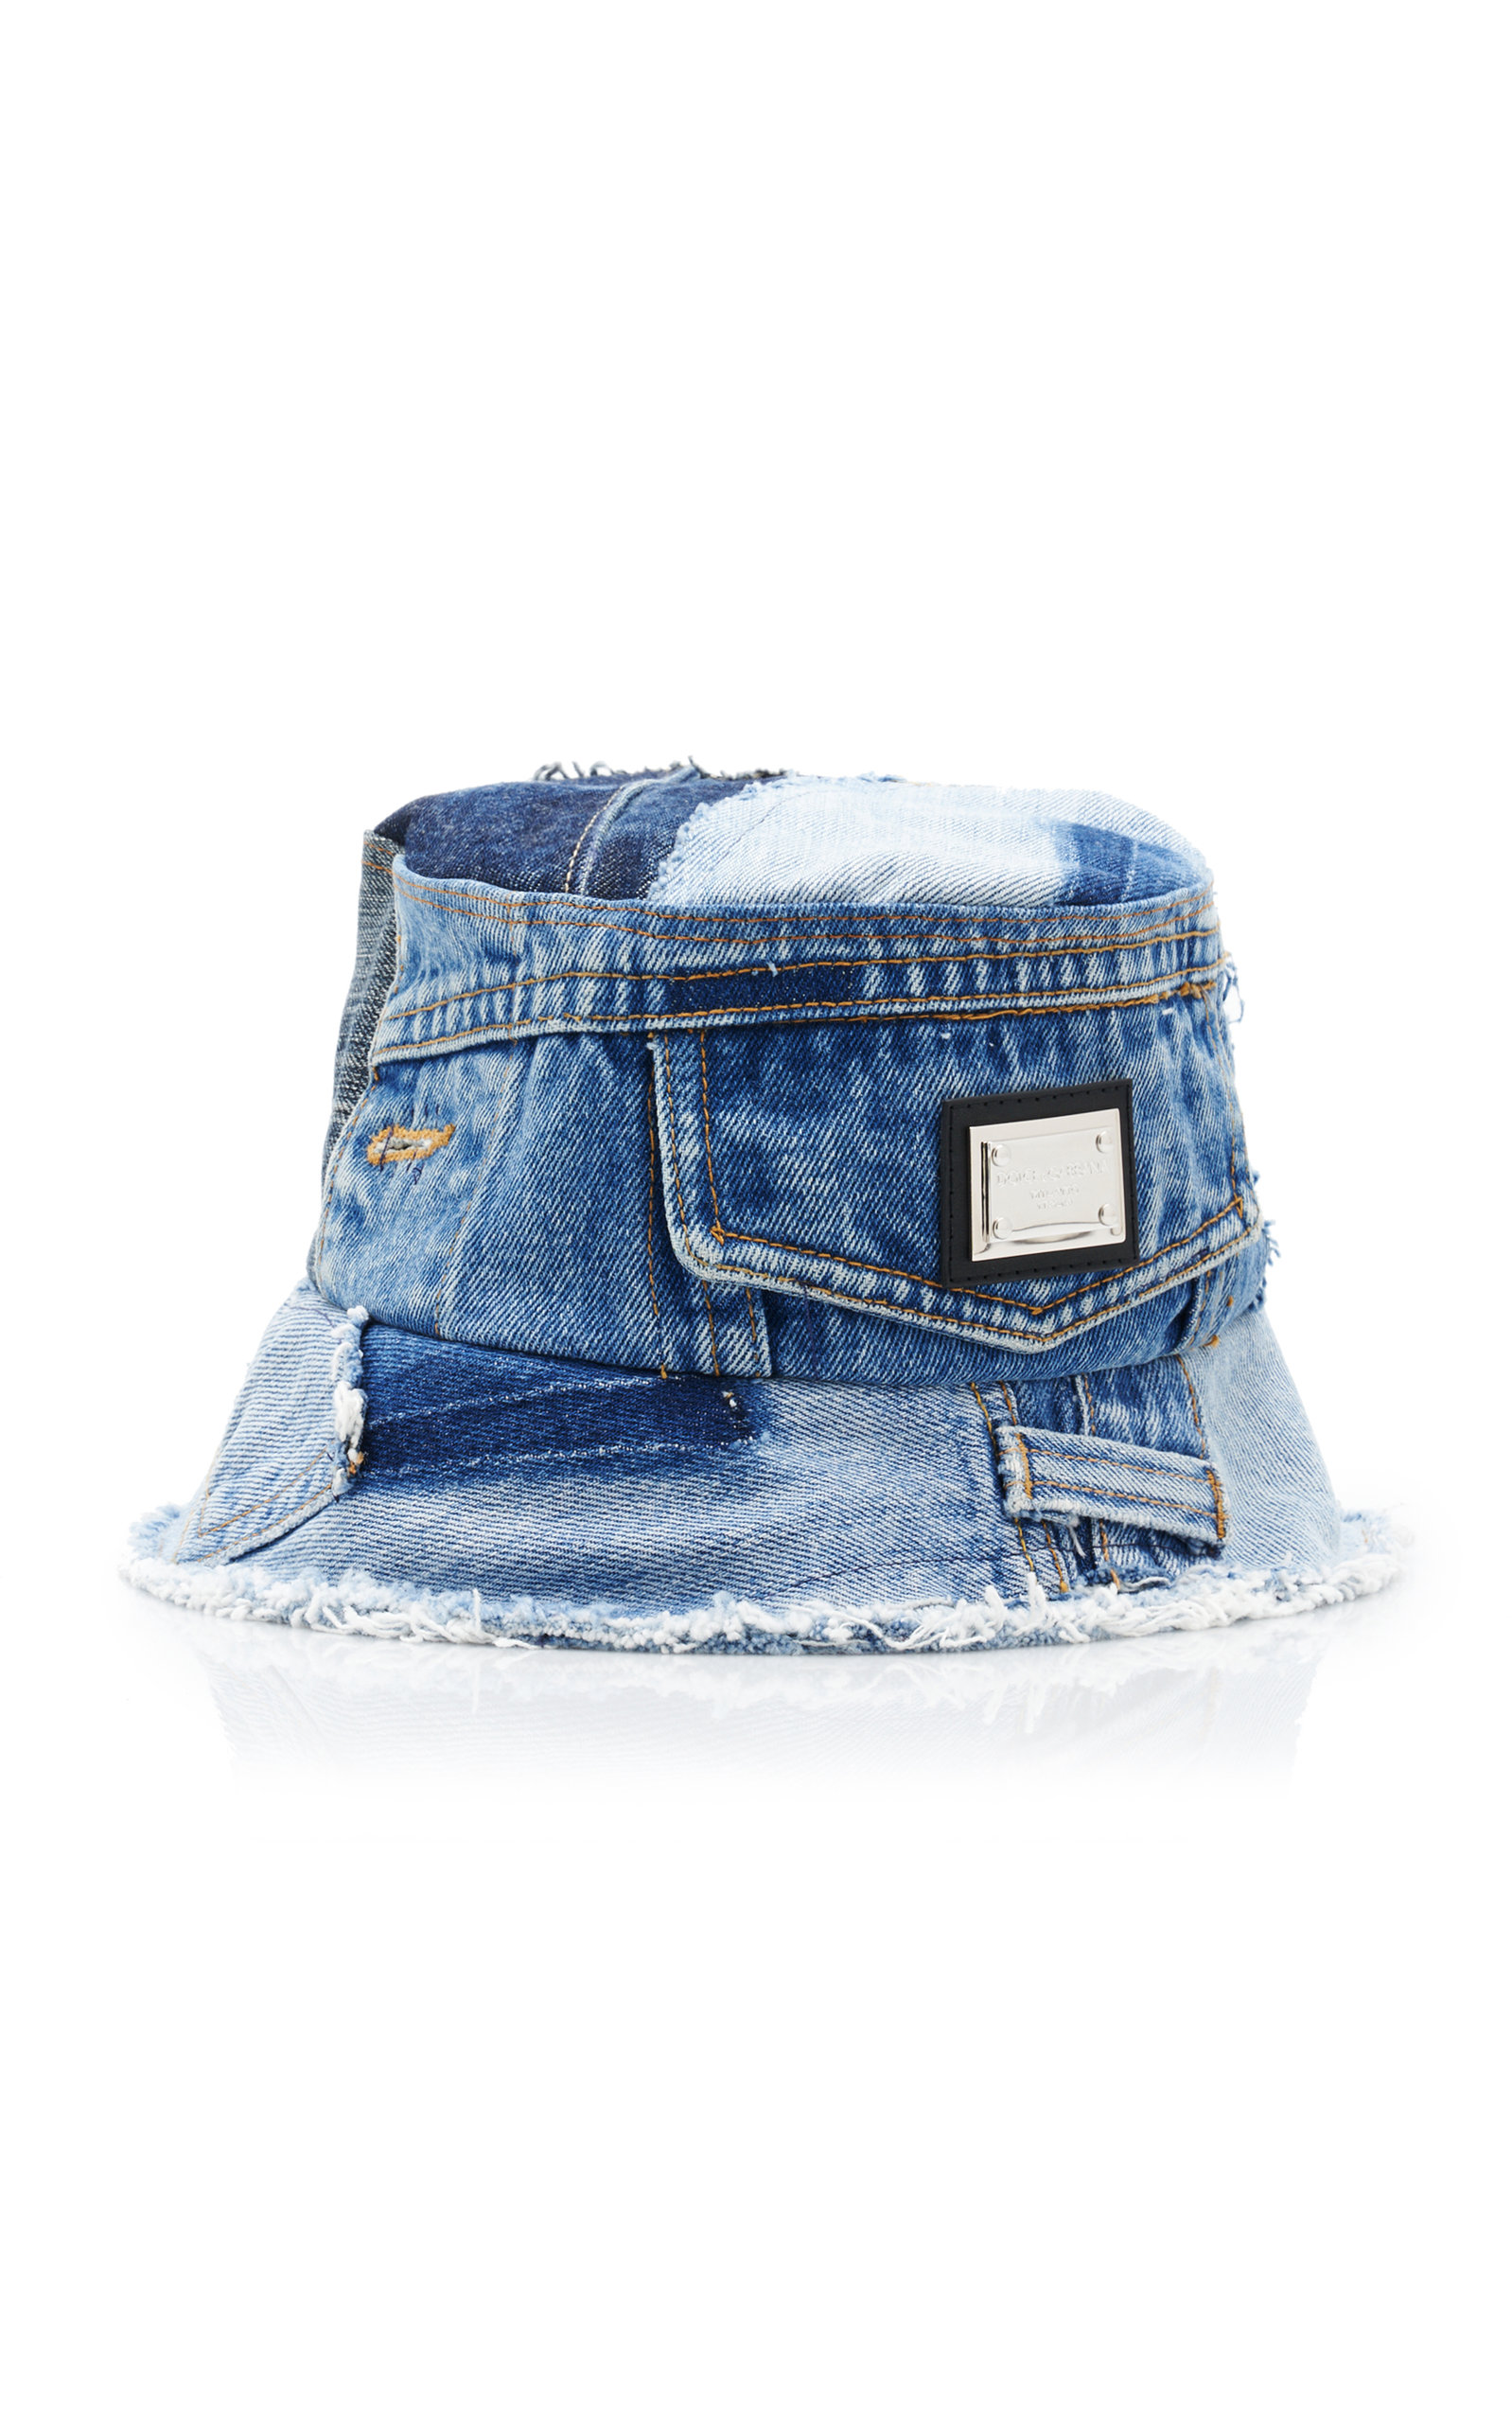 Dolce & Gabbana - Women's Patchwork Denim Bucket Hat - Blue - EU 56 - Moda Operandi